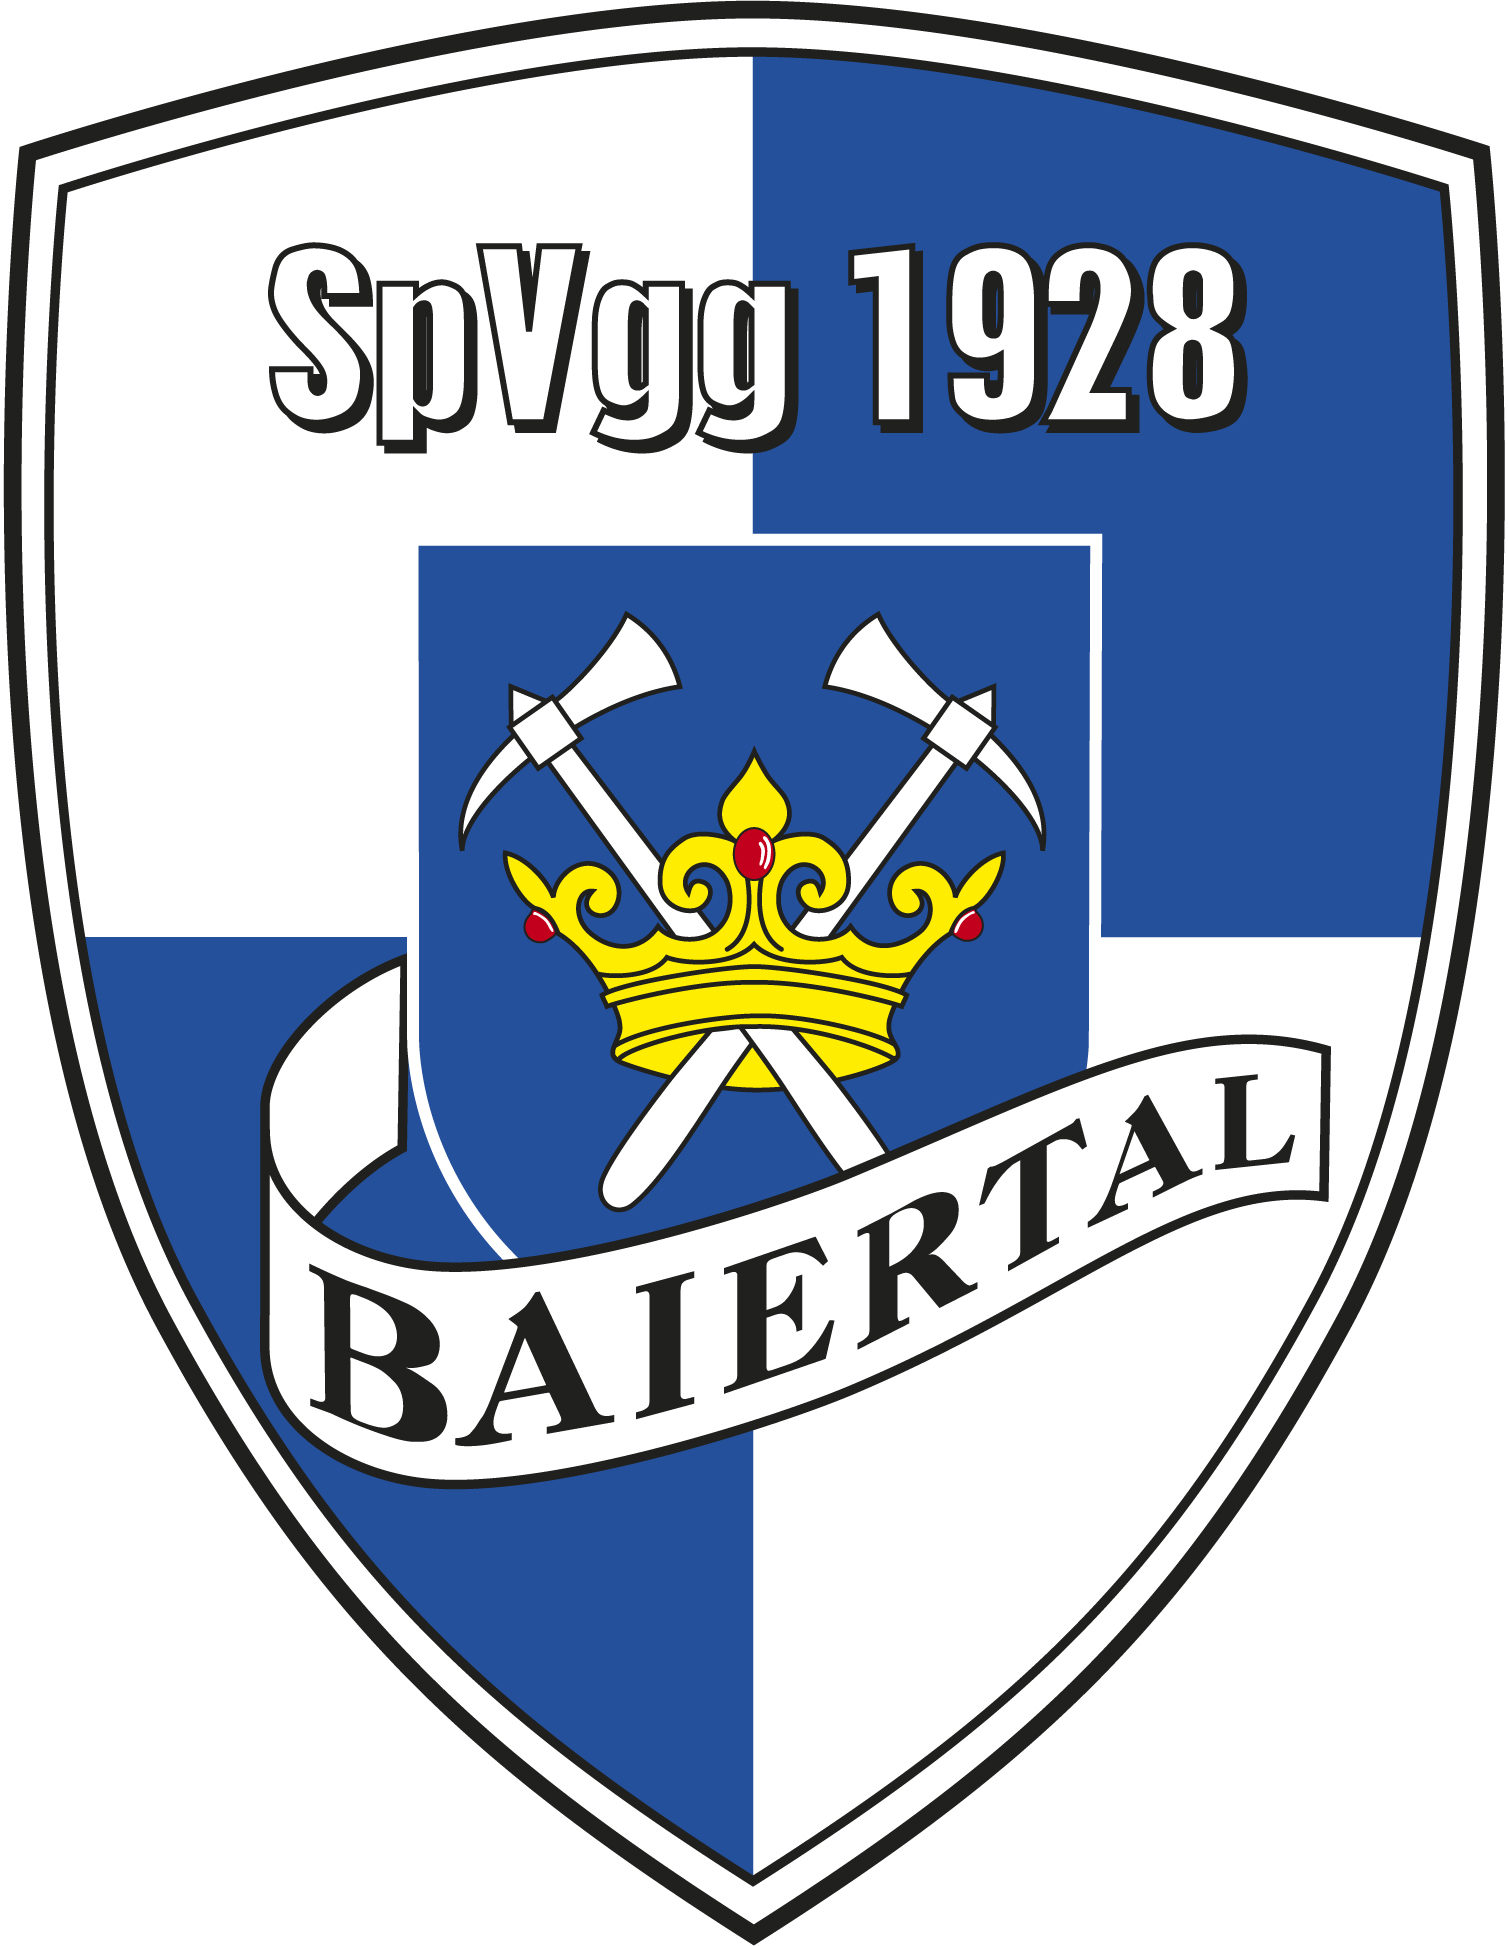 SpVgg Baiertal